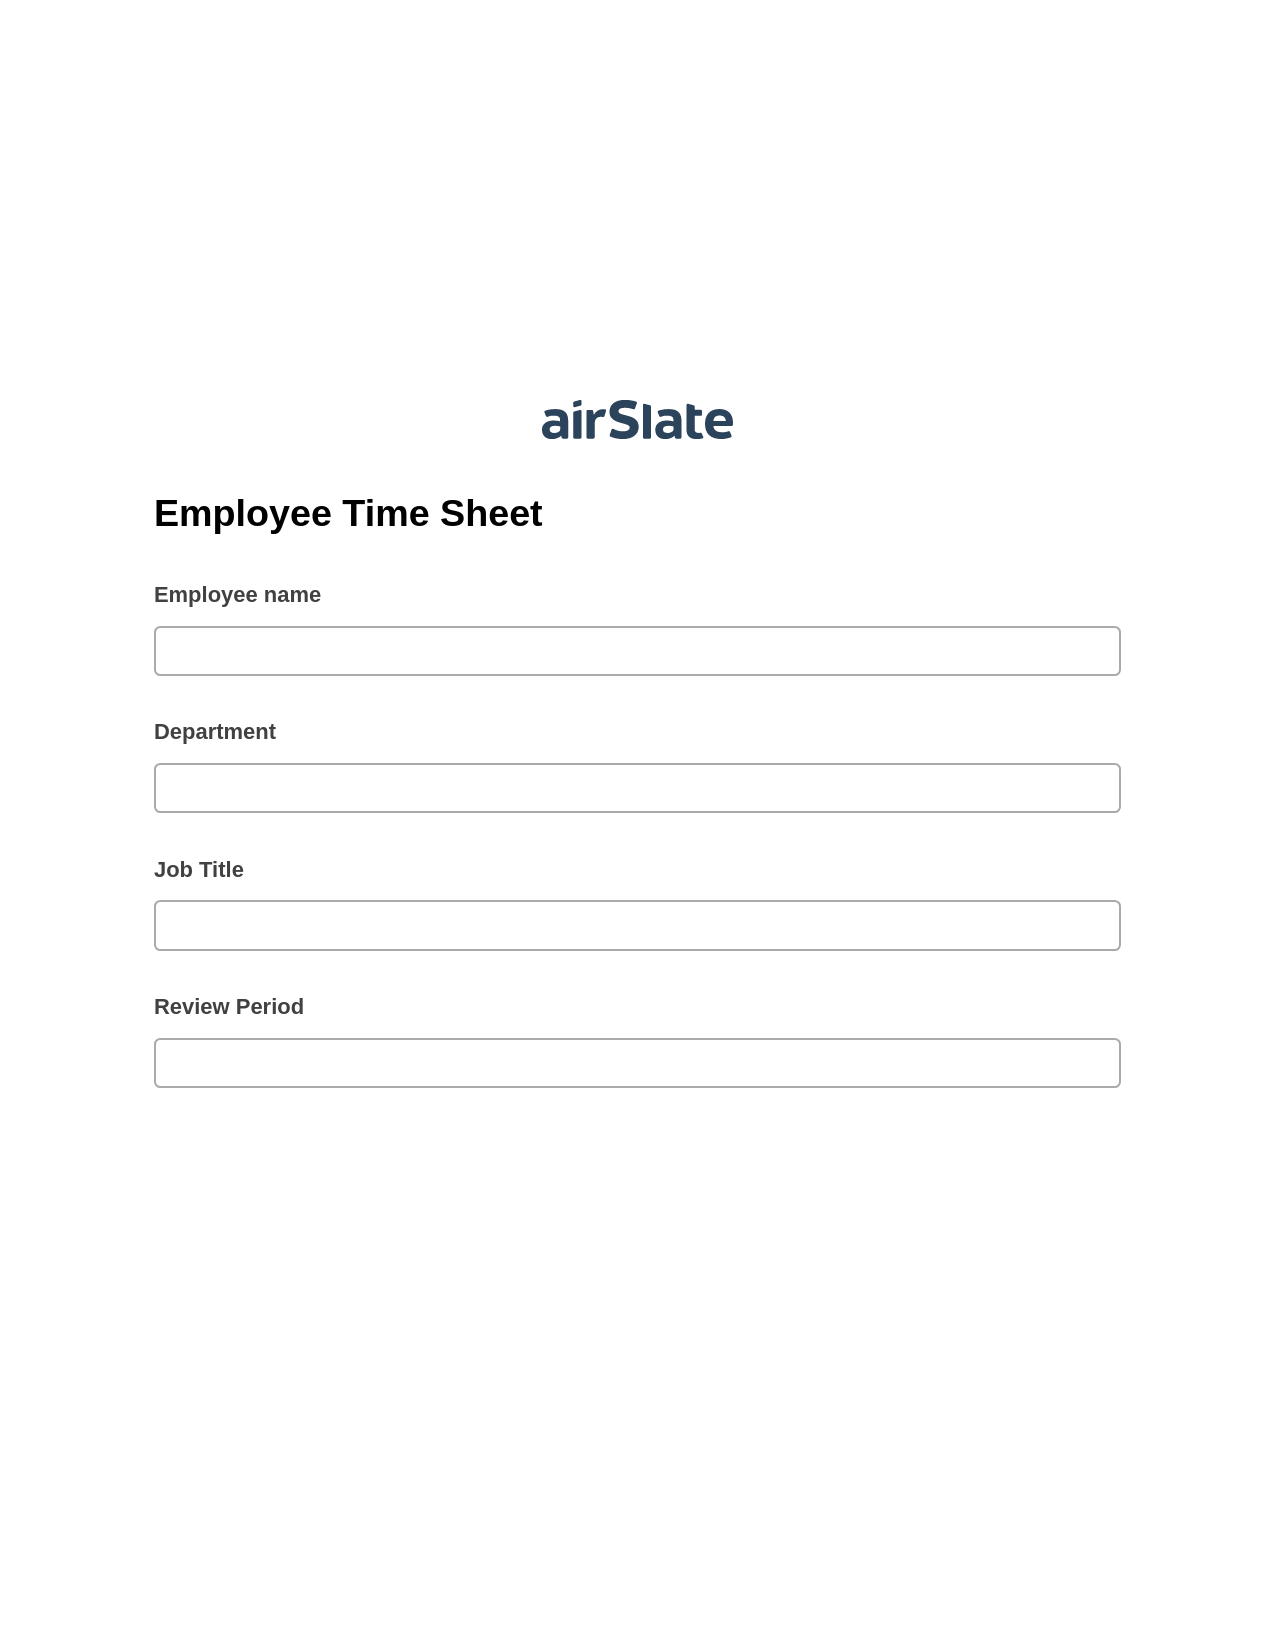 Employee Time Sheet Pre-fill from Excel Spreadsheet Bot, Google Cloud Print Bot, Slack Notification Postfinish Bot